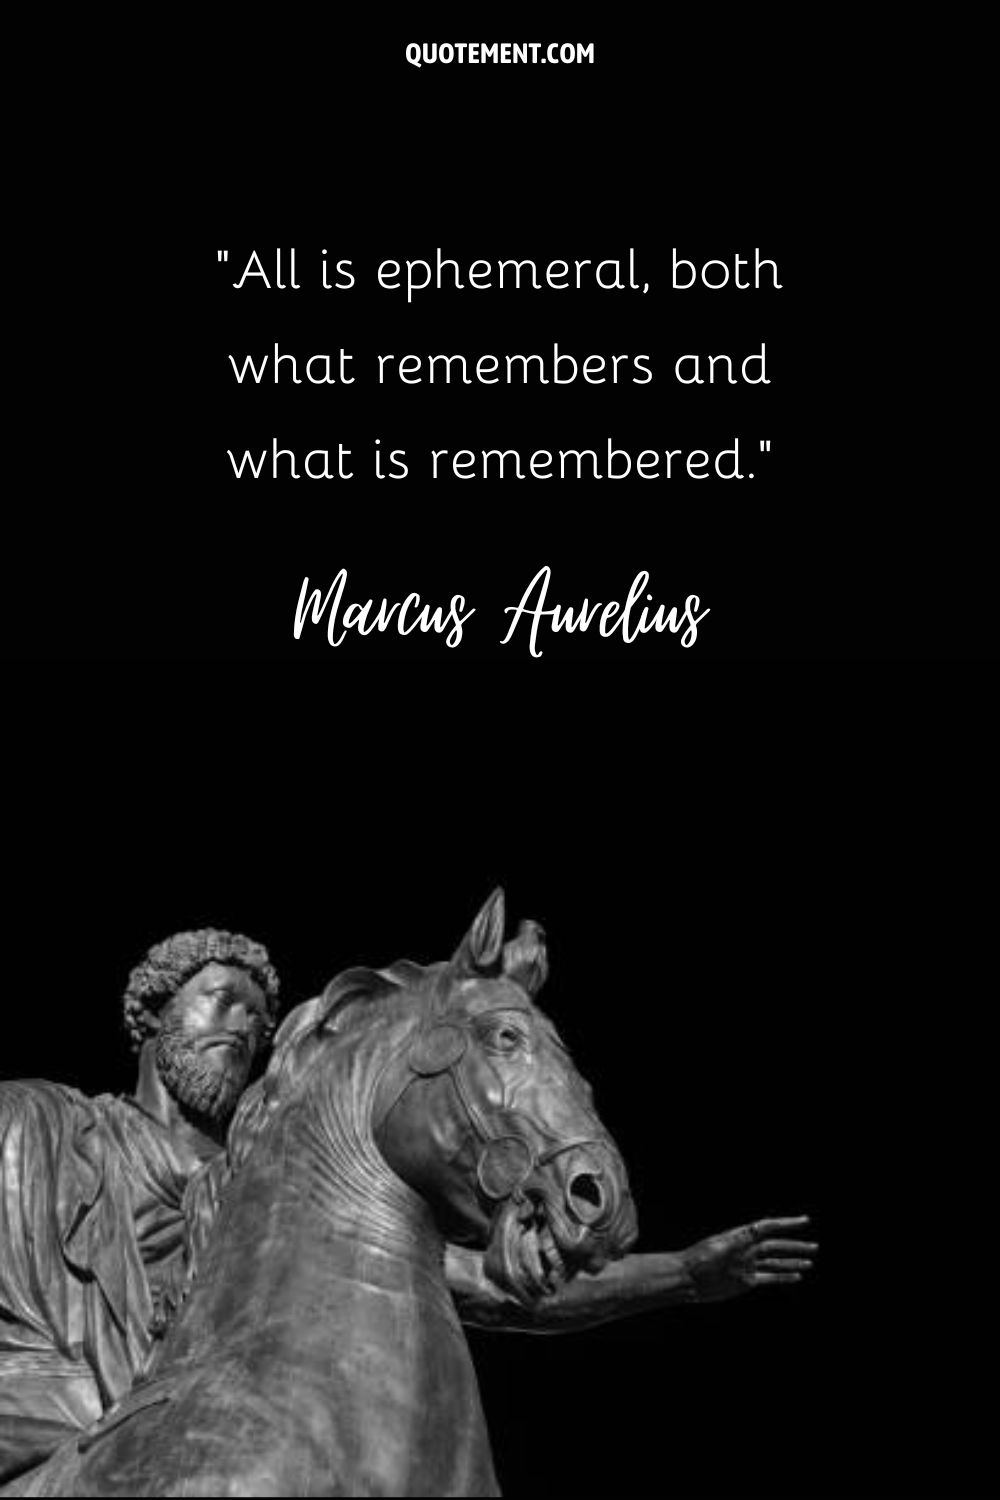 Noble presence frozen in time: Marcus Aurelius' sculpture
